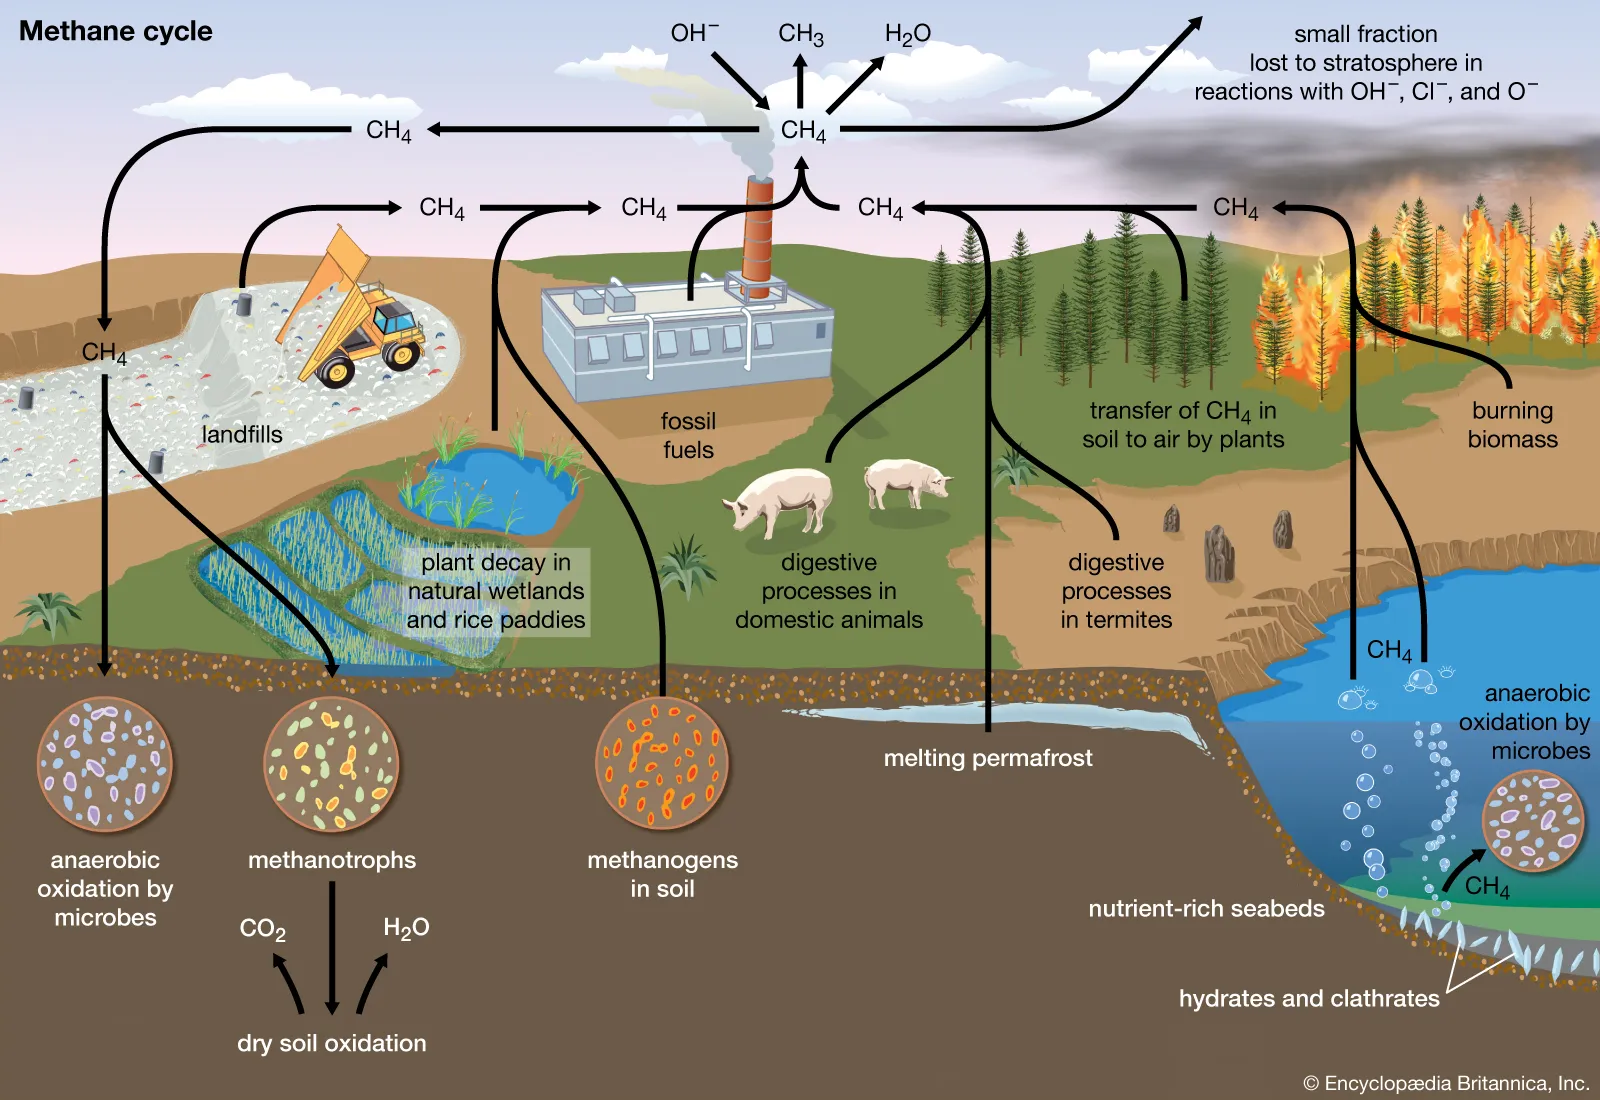 Diagram of the methane cycle by Encyclopaeda Brittanica